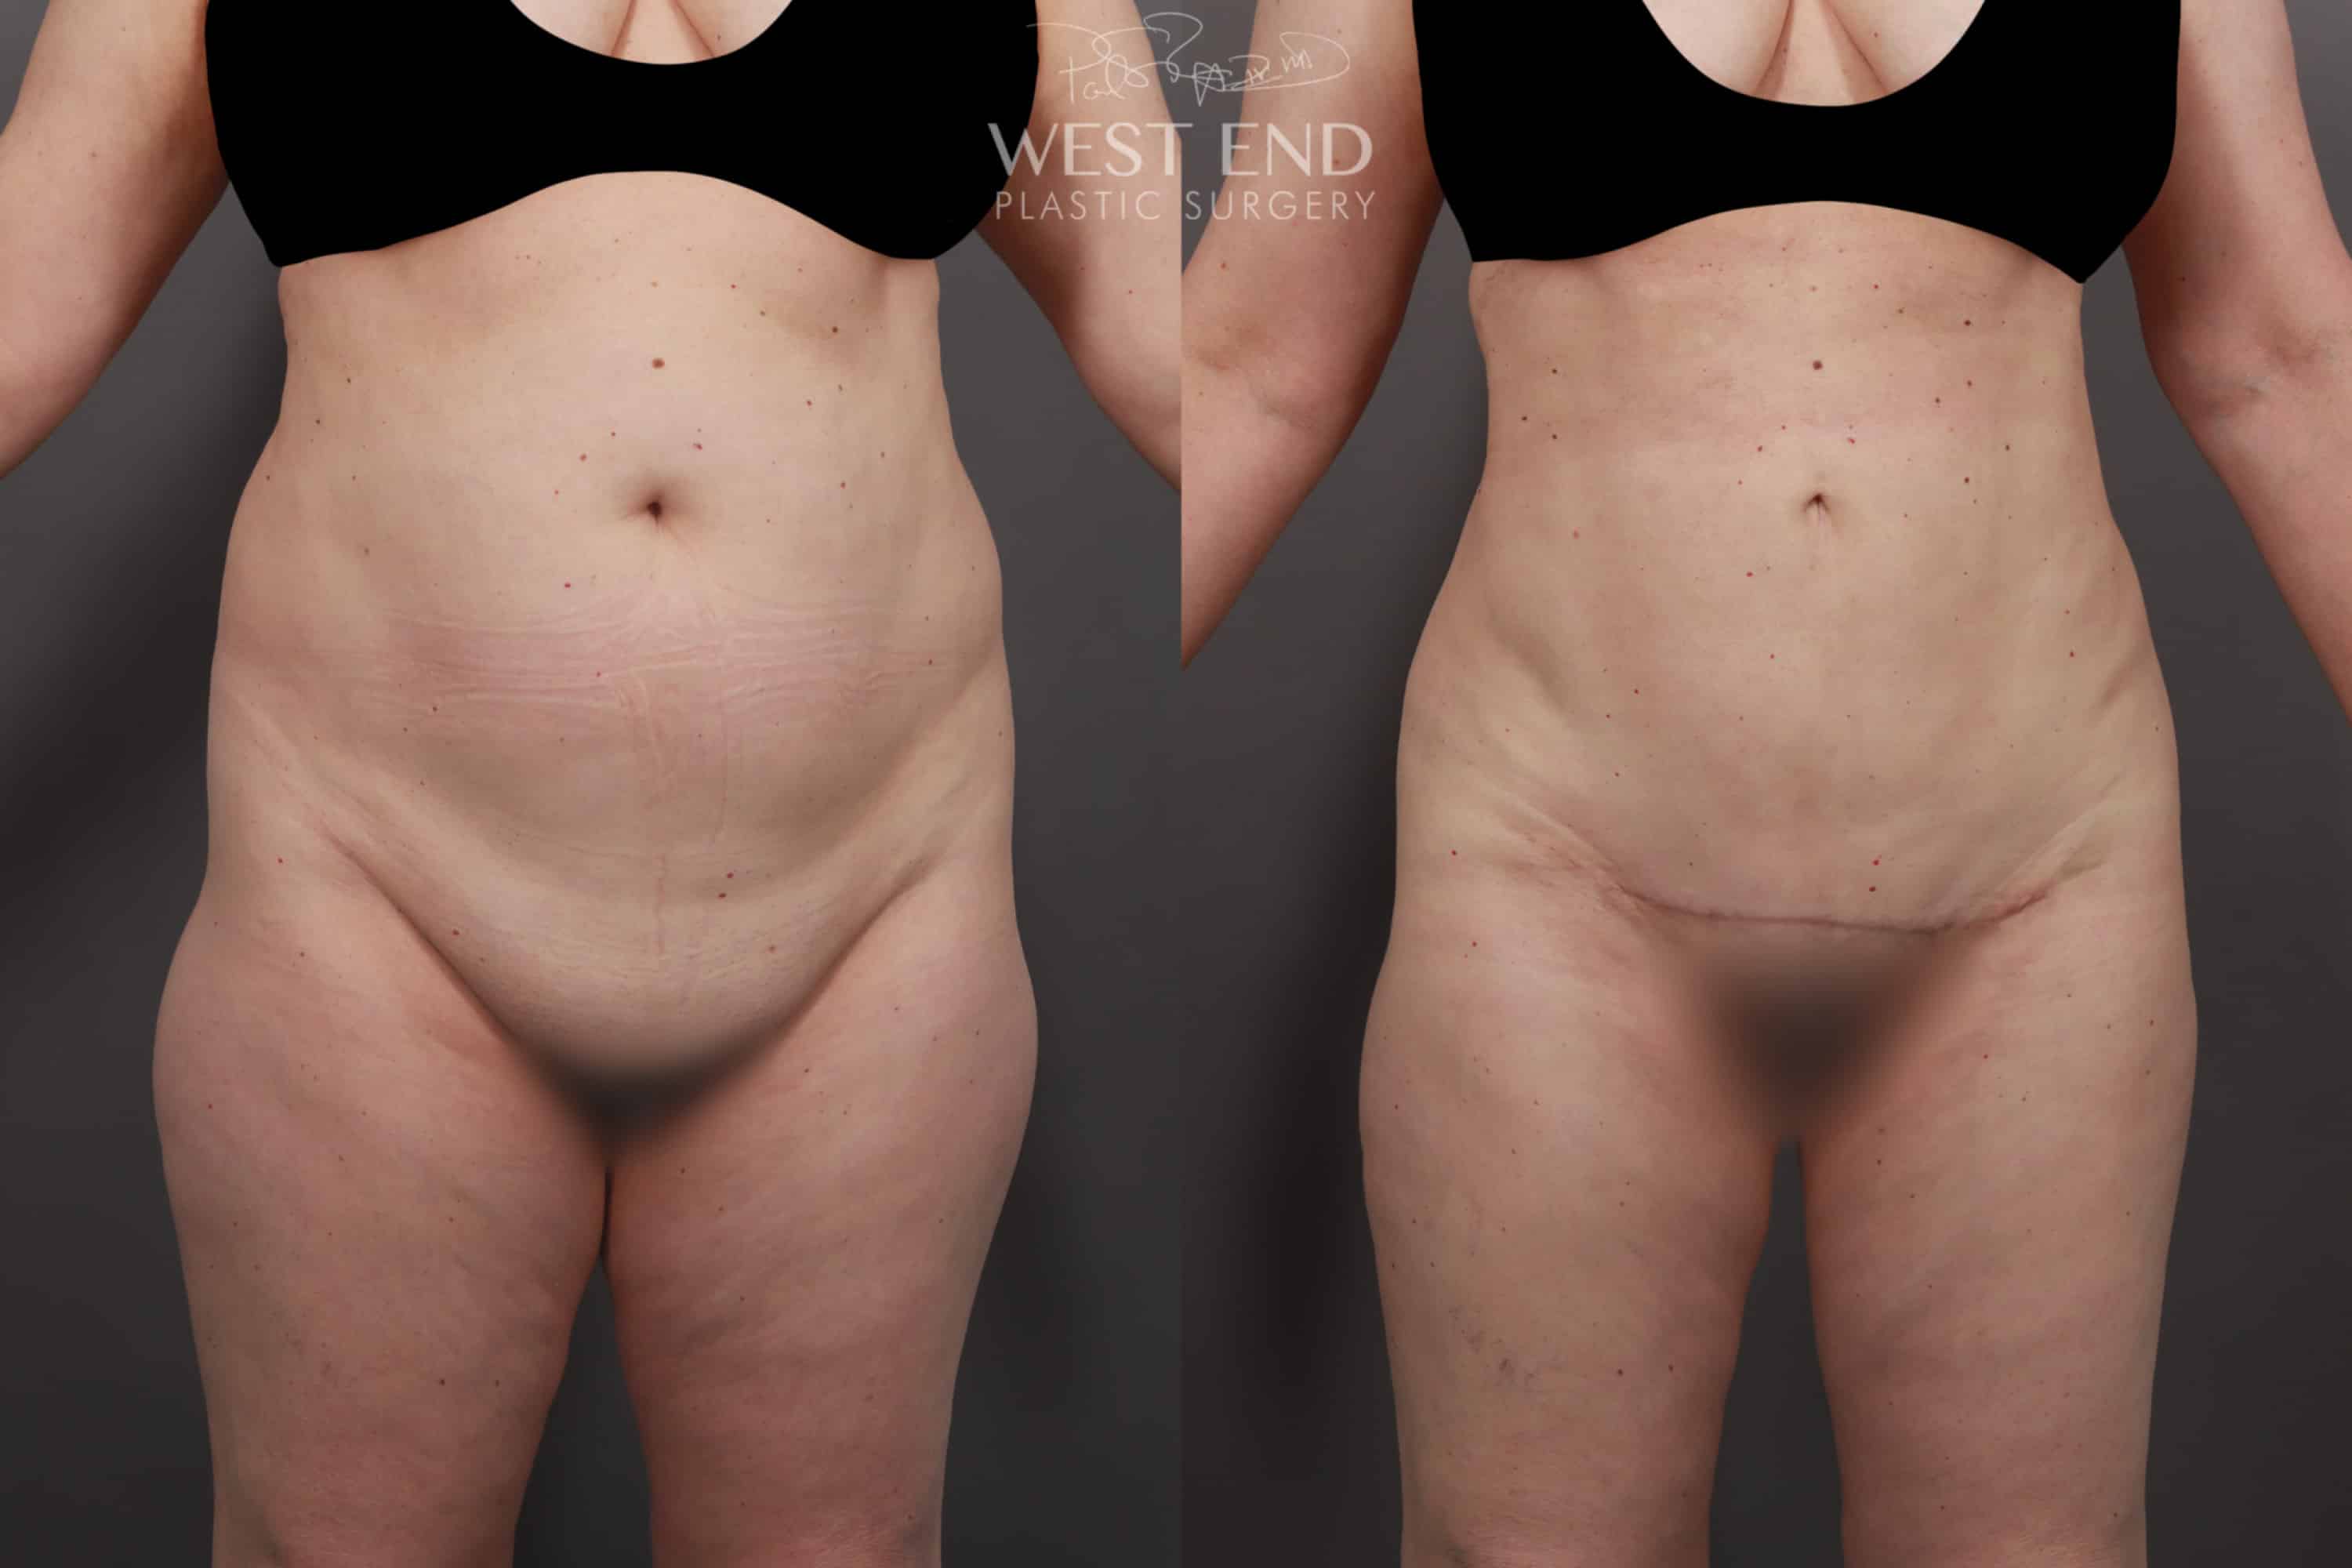 Mons Pubis Lift, Liposuction & Renuvion Skin Tightening